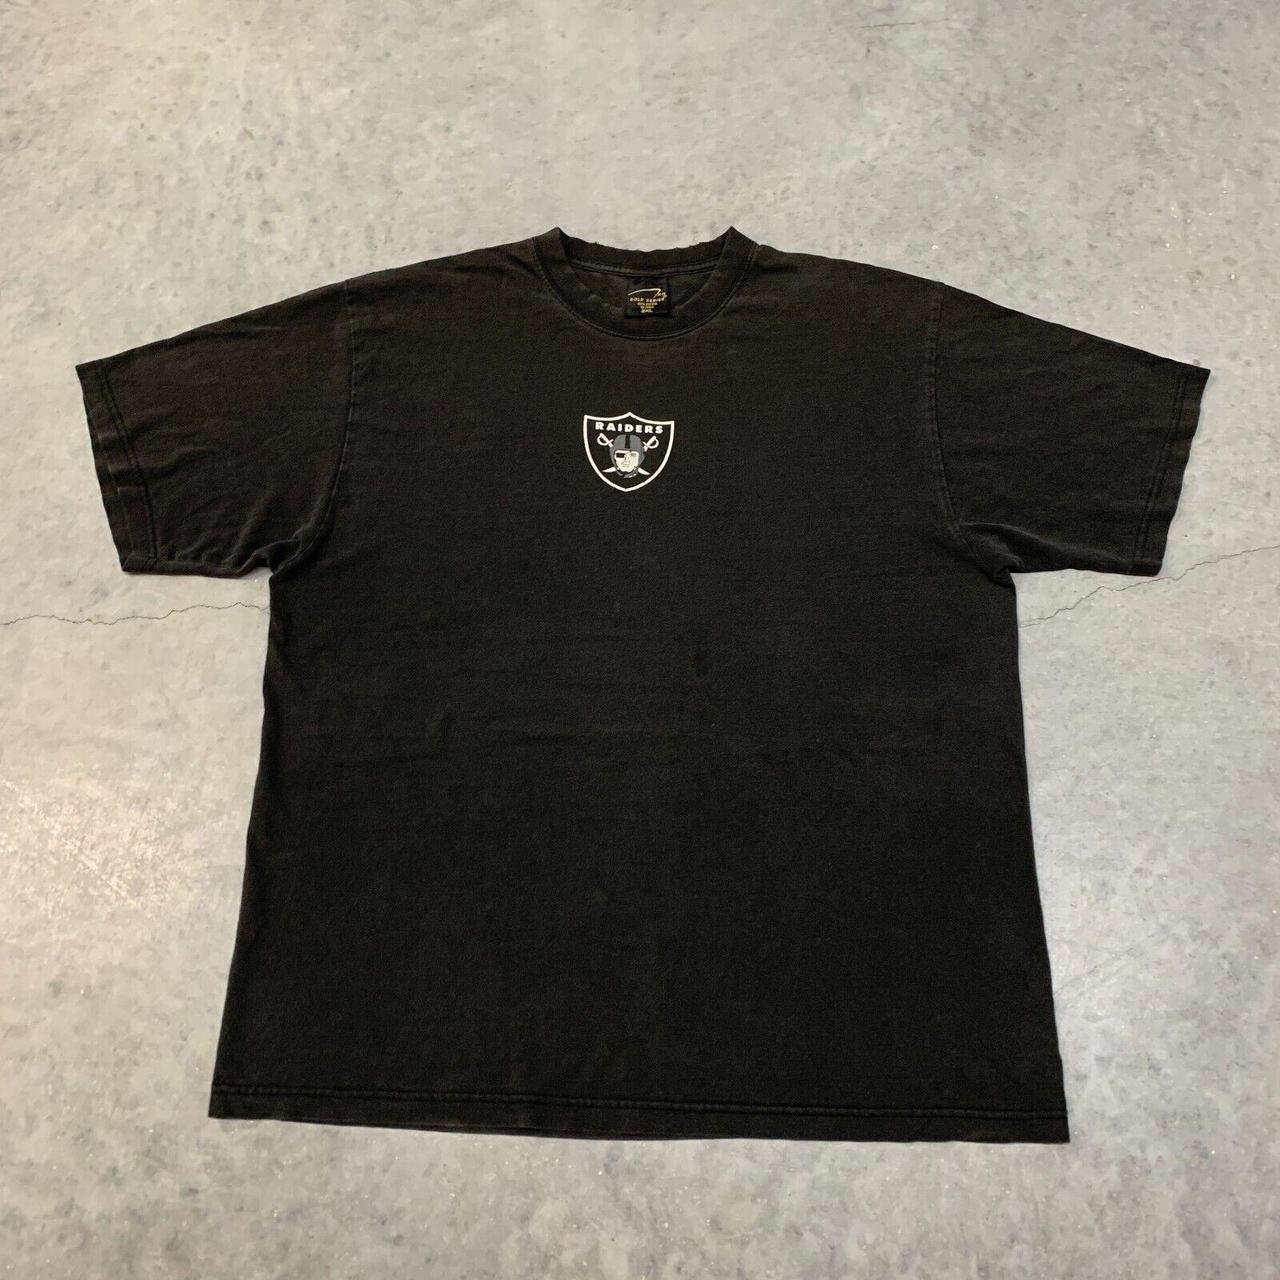 Product Image 3 - Vintage Oakland Raiders Shirt Adult